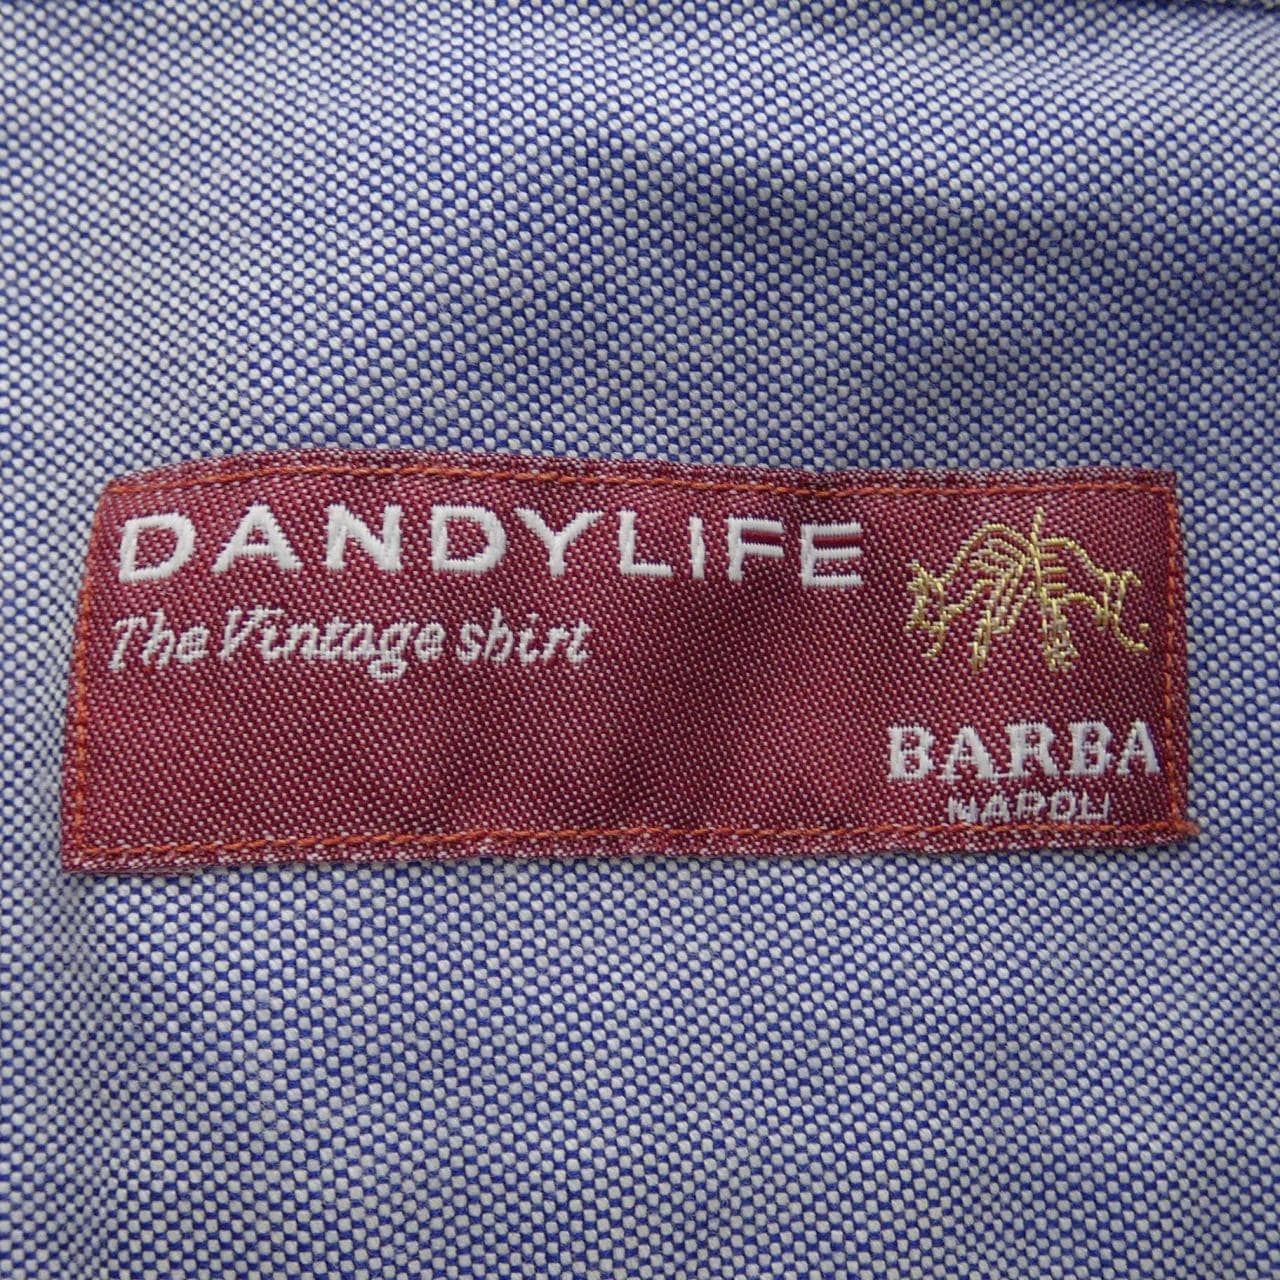 Barba BARBA shirt